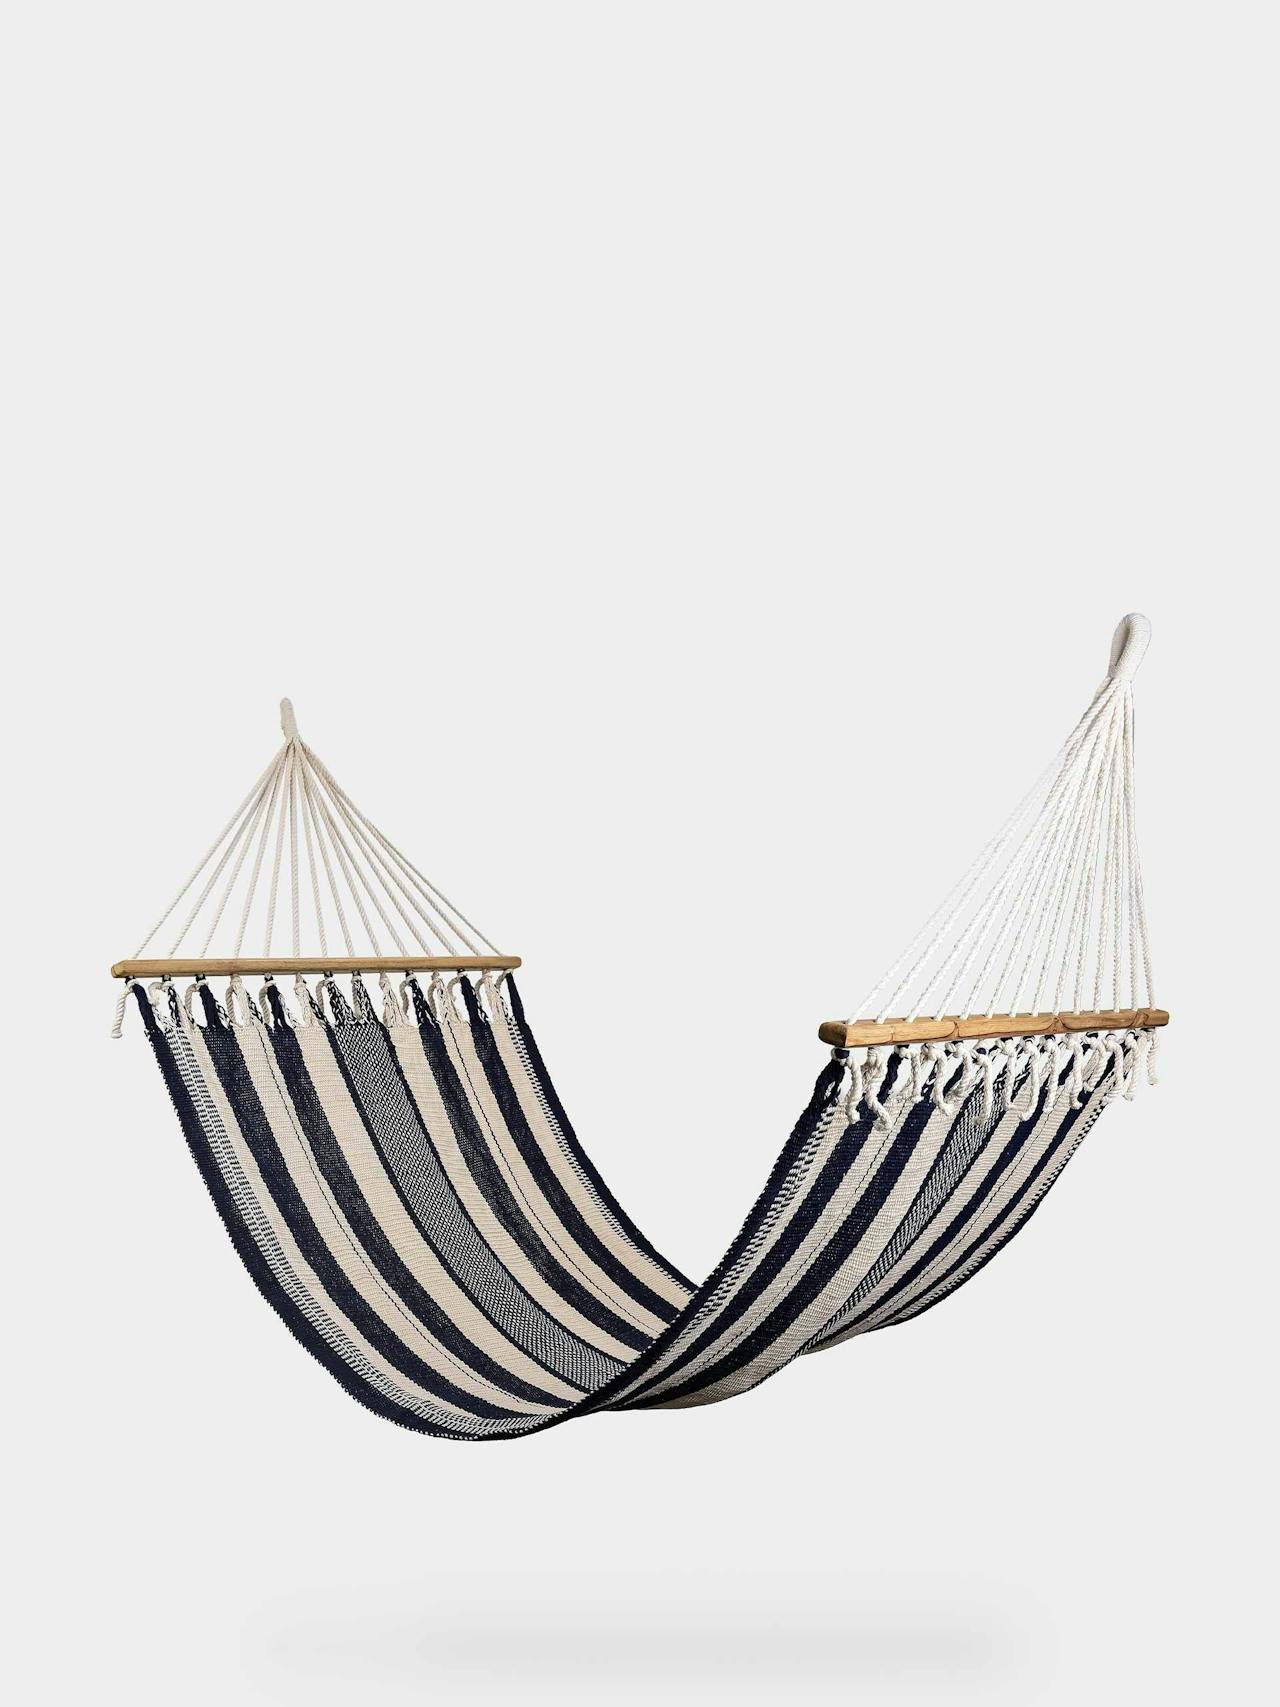 Handwoven cotton king hammock